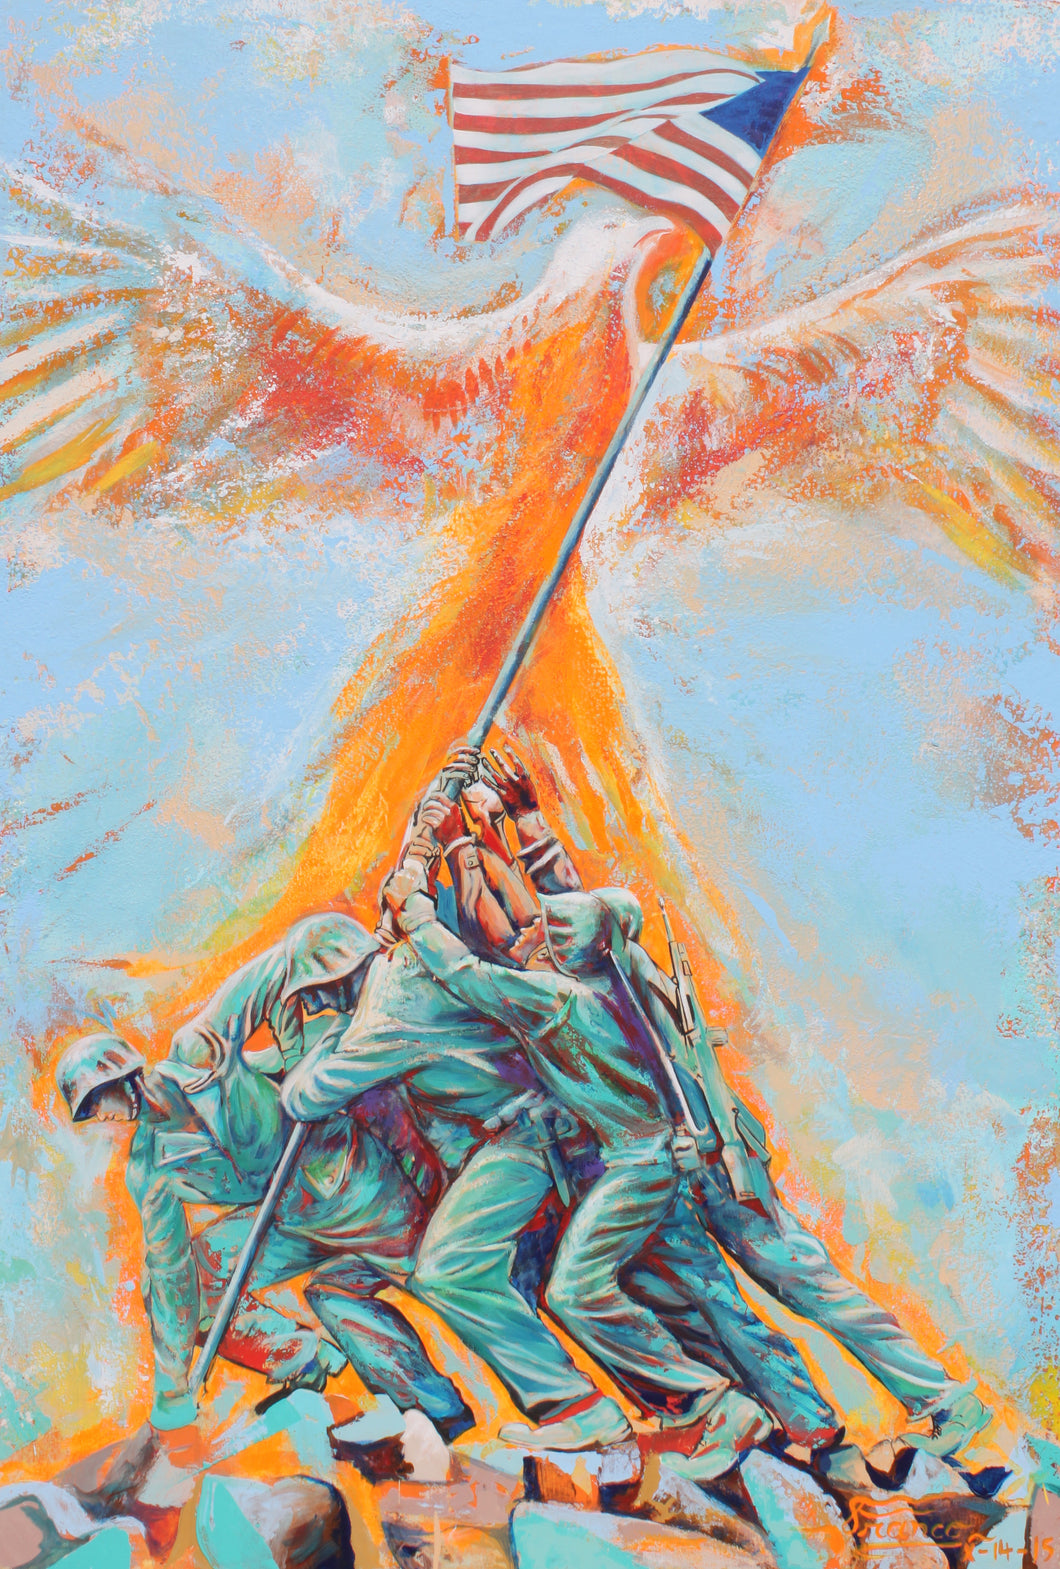 The Marines | 18 x 24 n. | Limited Edition 3/25 l  Enhanced print on canvas.